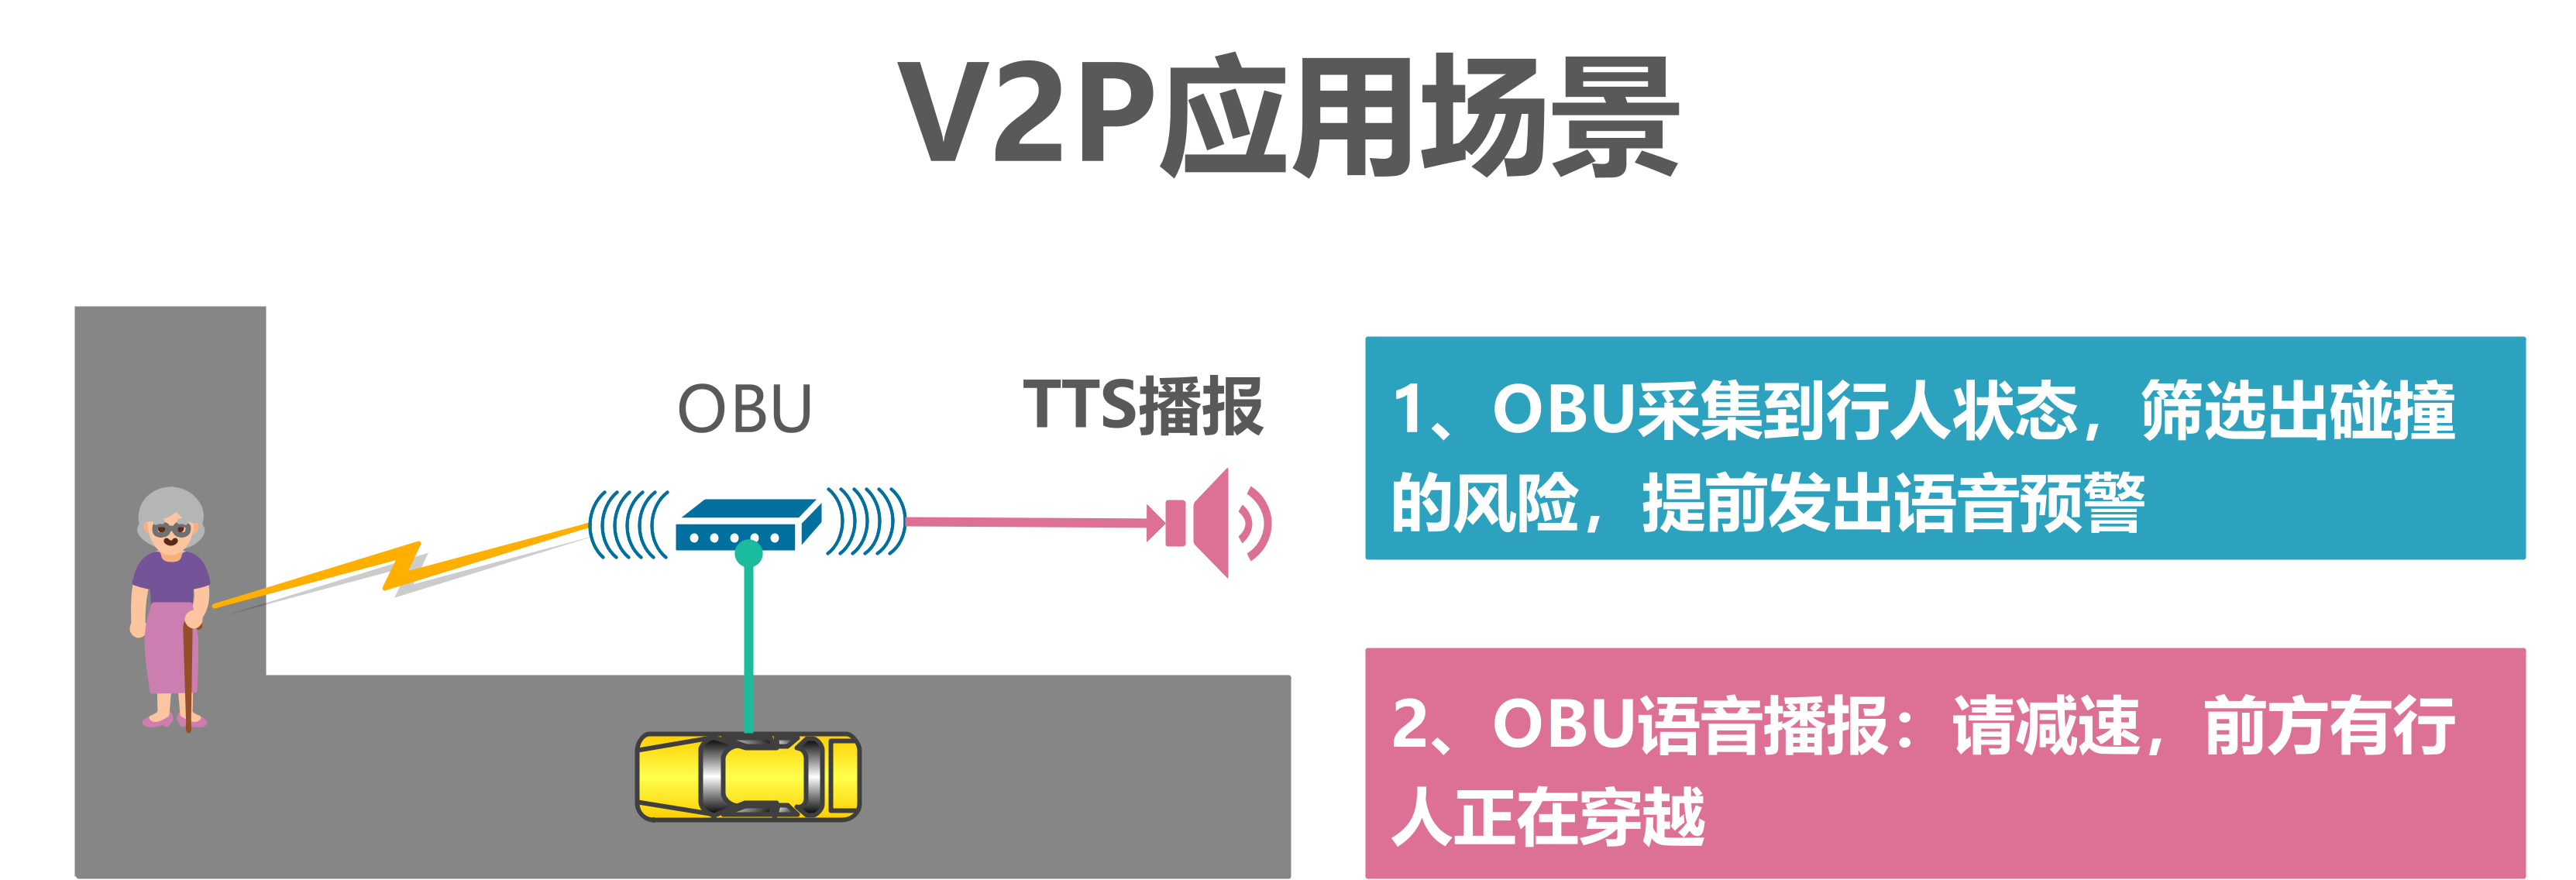 V2P应用场景.png